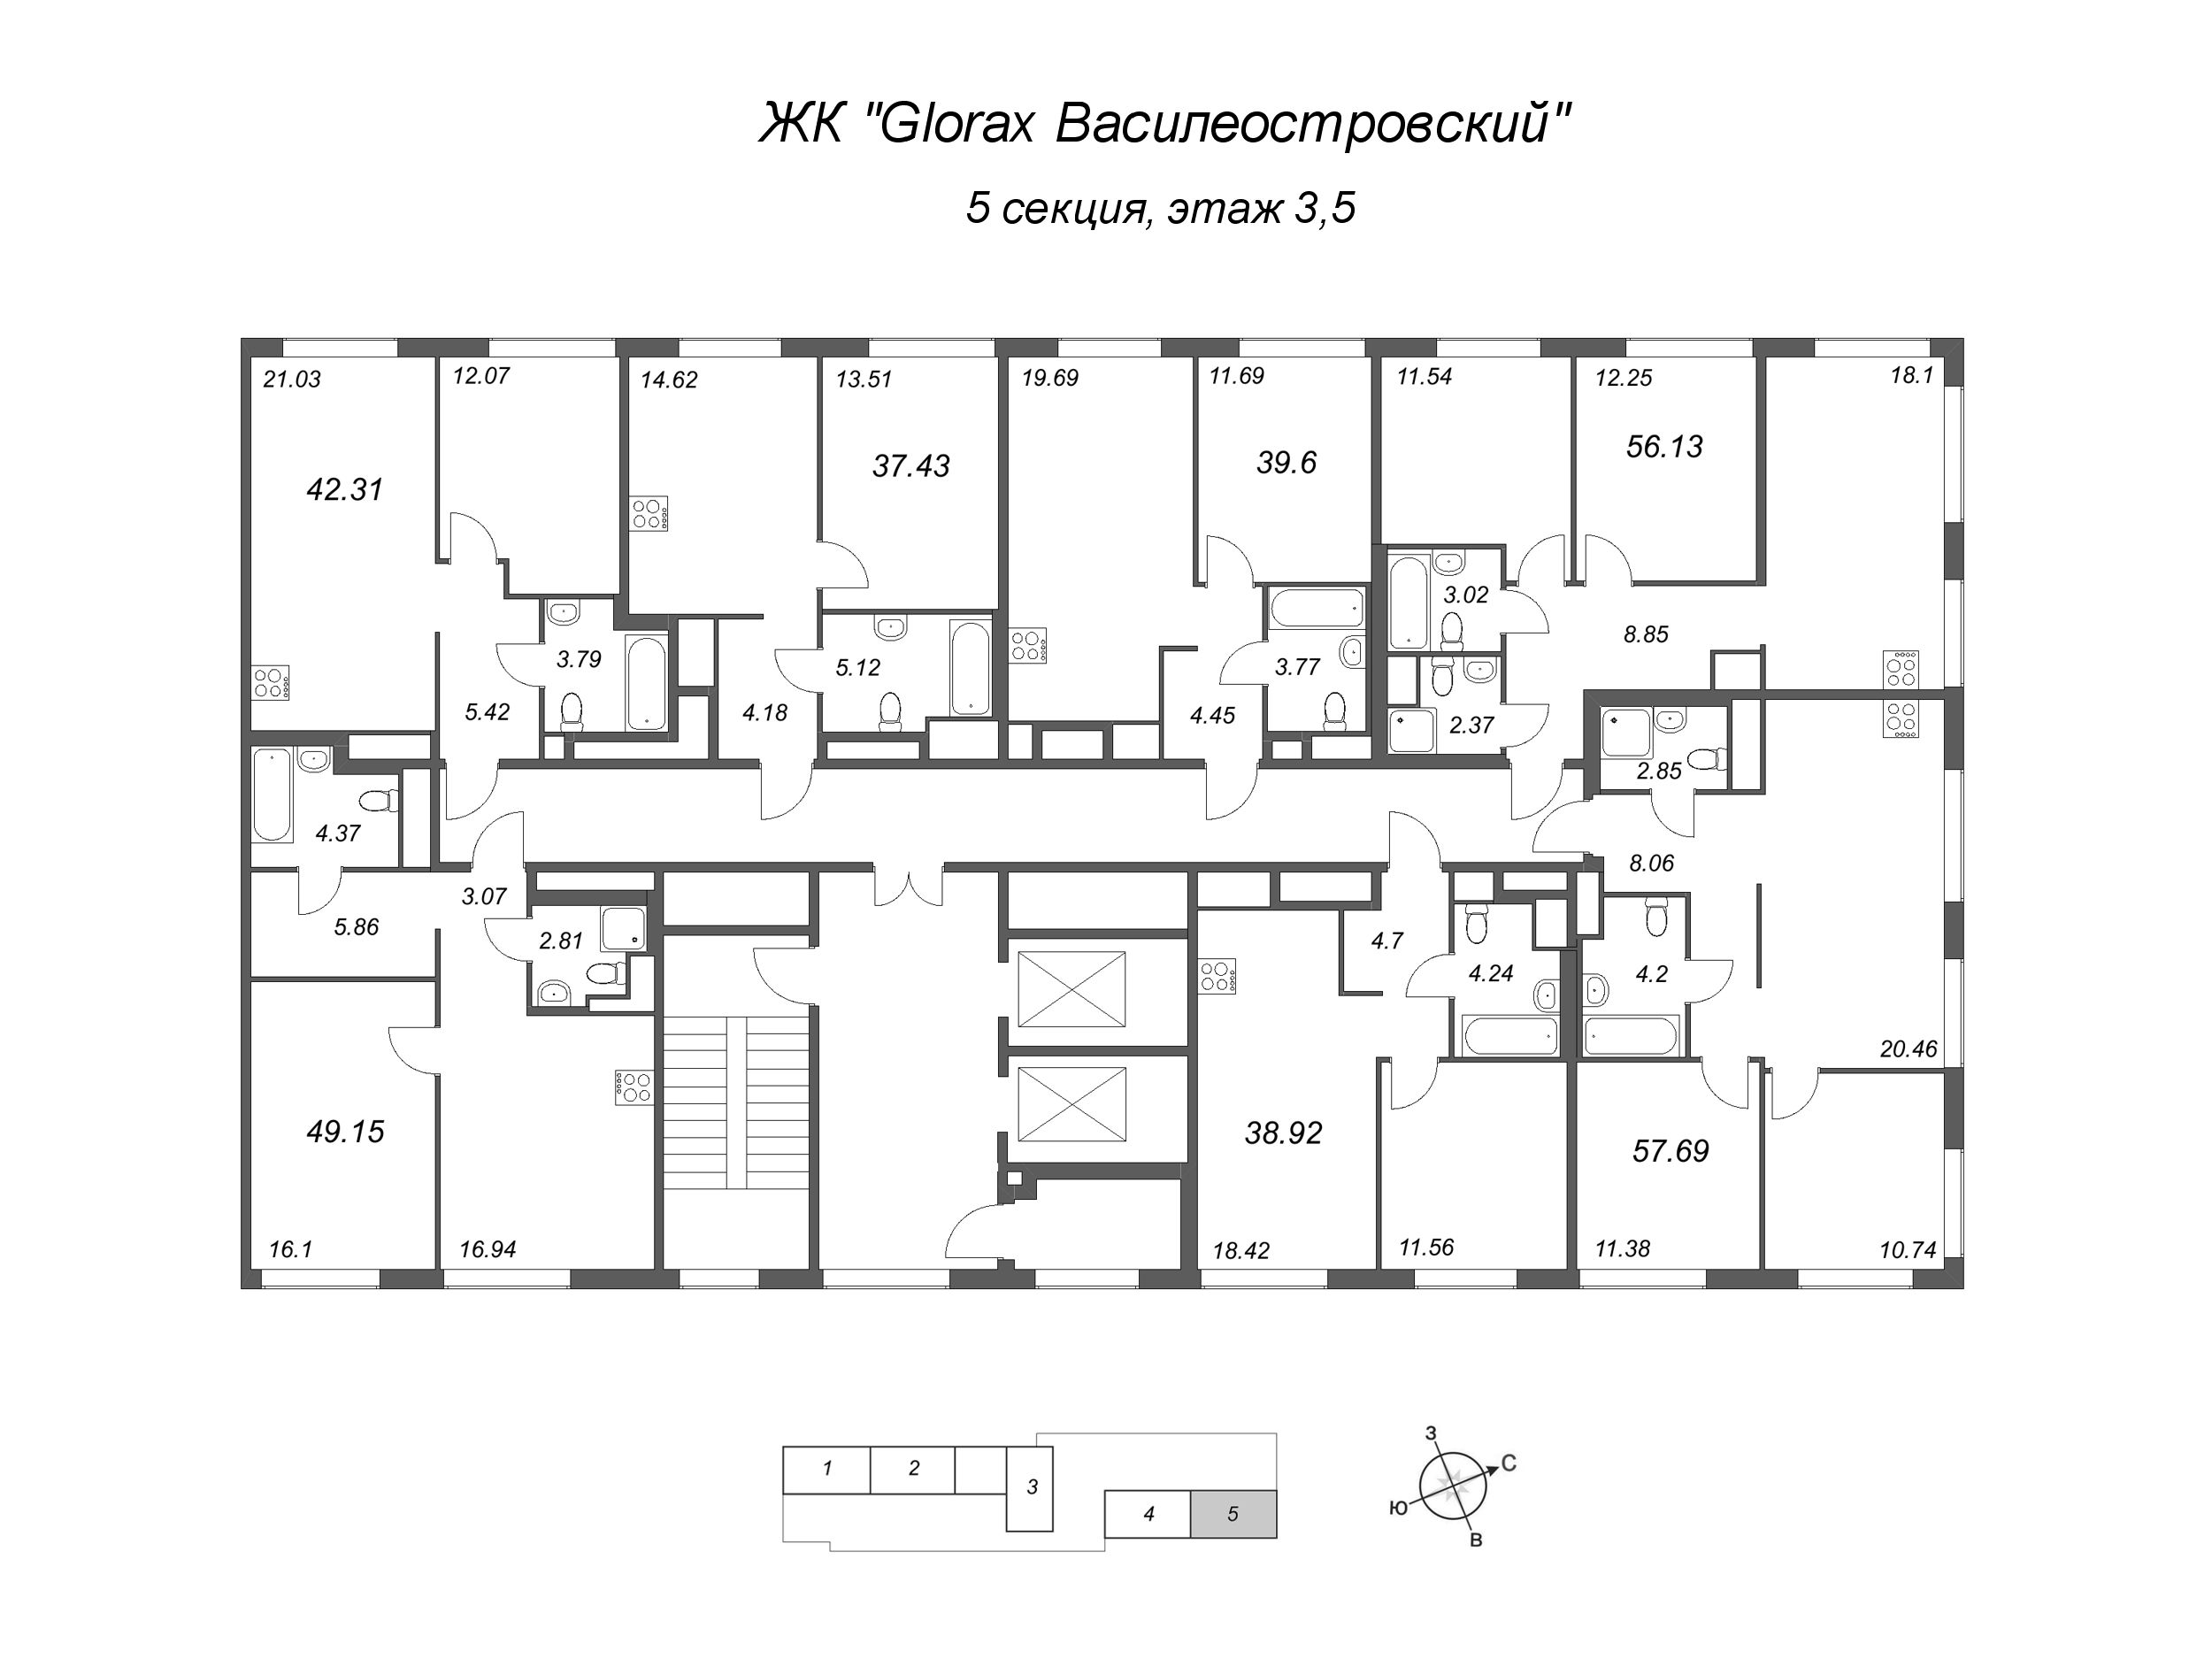 2-комнатная (Евро) квартира, 42.31 м² - планировка этажа